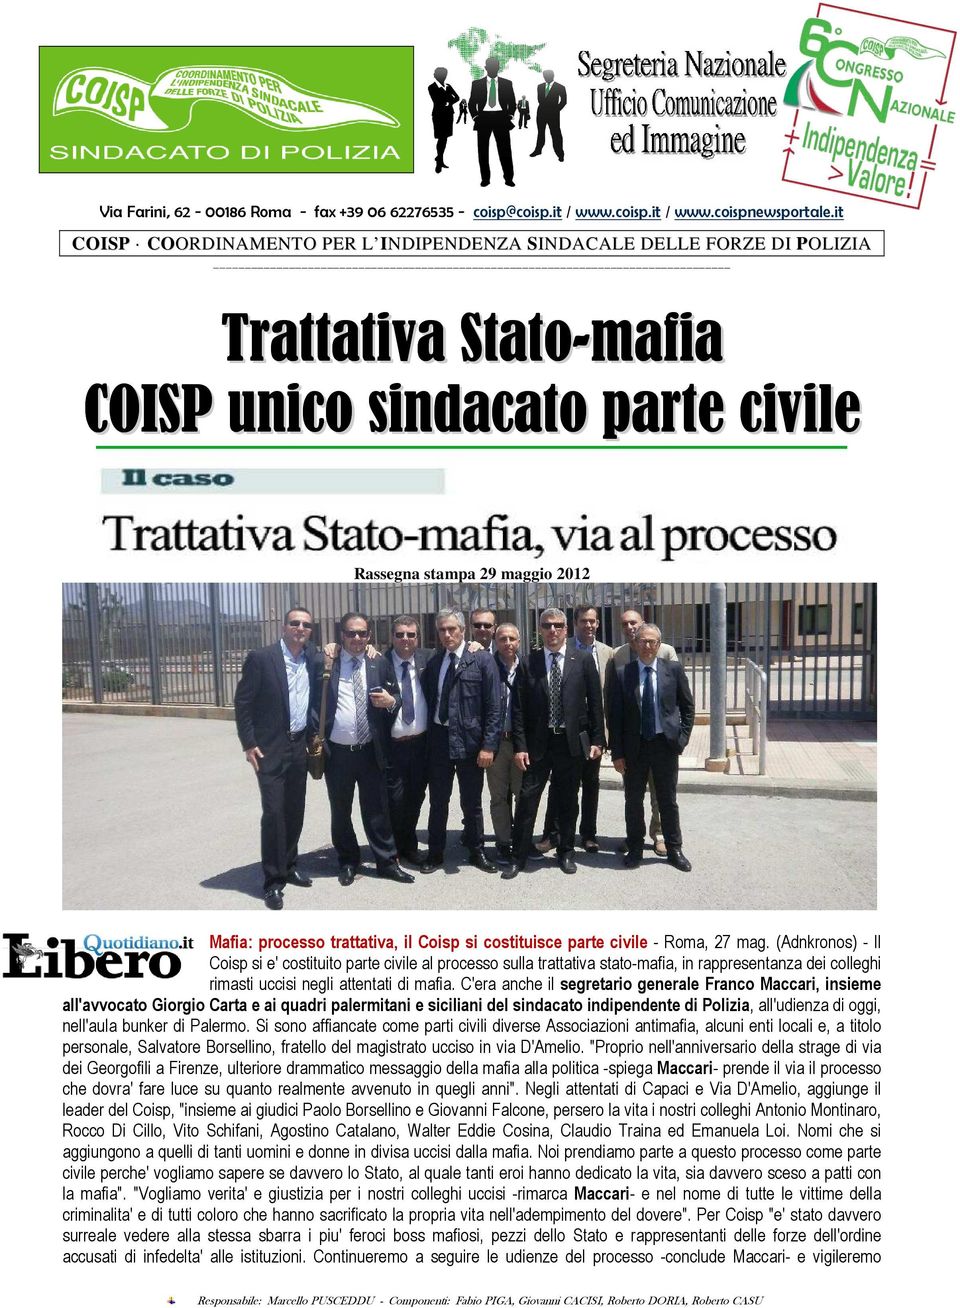 Coisp si costituisce parte civile - Roma, 27 mag.